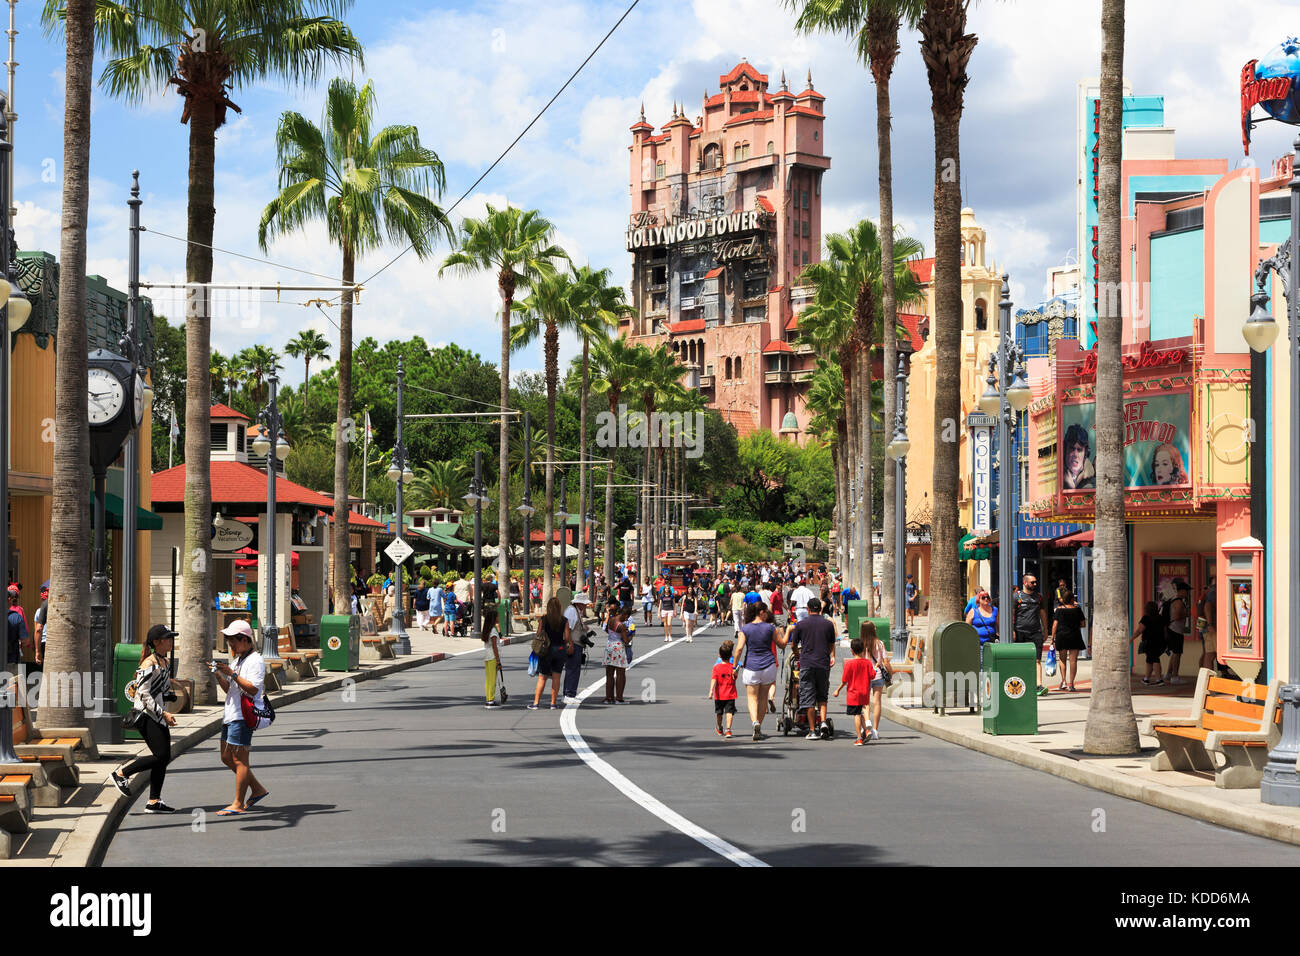 Holywood Tower Hotel,Resort Walt Disney World, il parco a tema di Orlando, Florida, Stati Uniti d'America Foto Stock